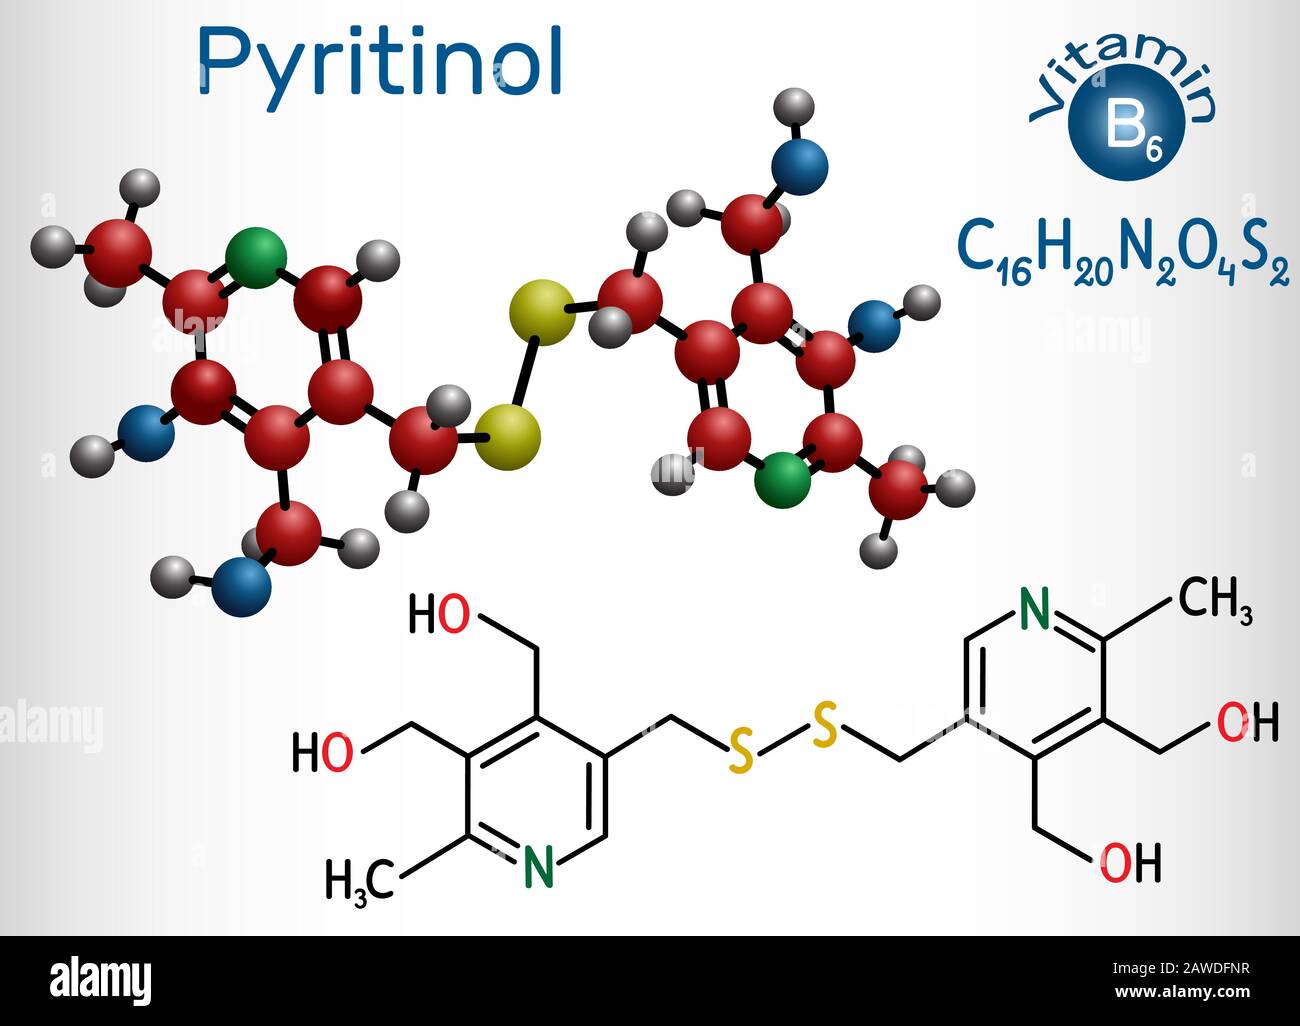 Pyritinol molecule, pyridoxine disulfide, pyrithioxine, is a vitamin B6. Structural chemical formula and molecule model. Vector illustration Stock Vector